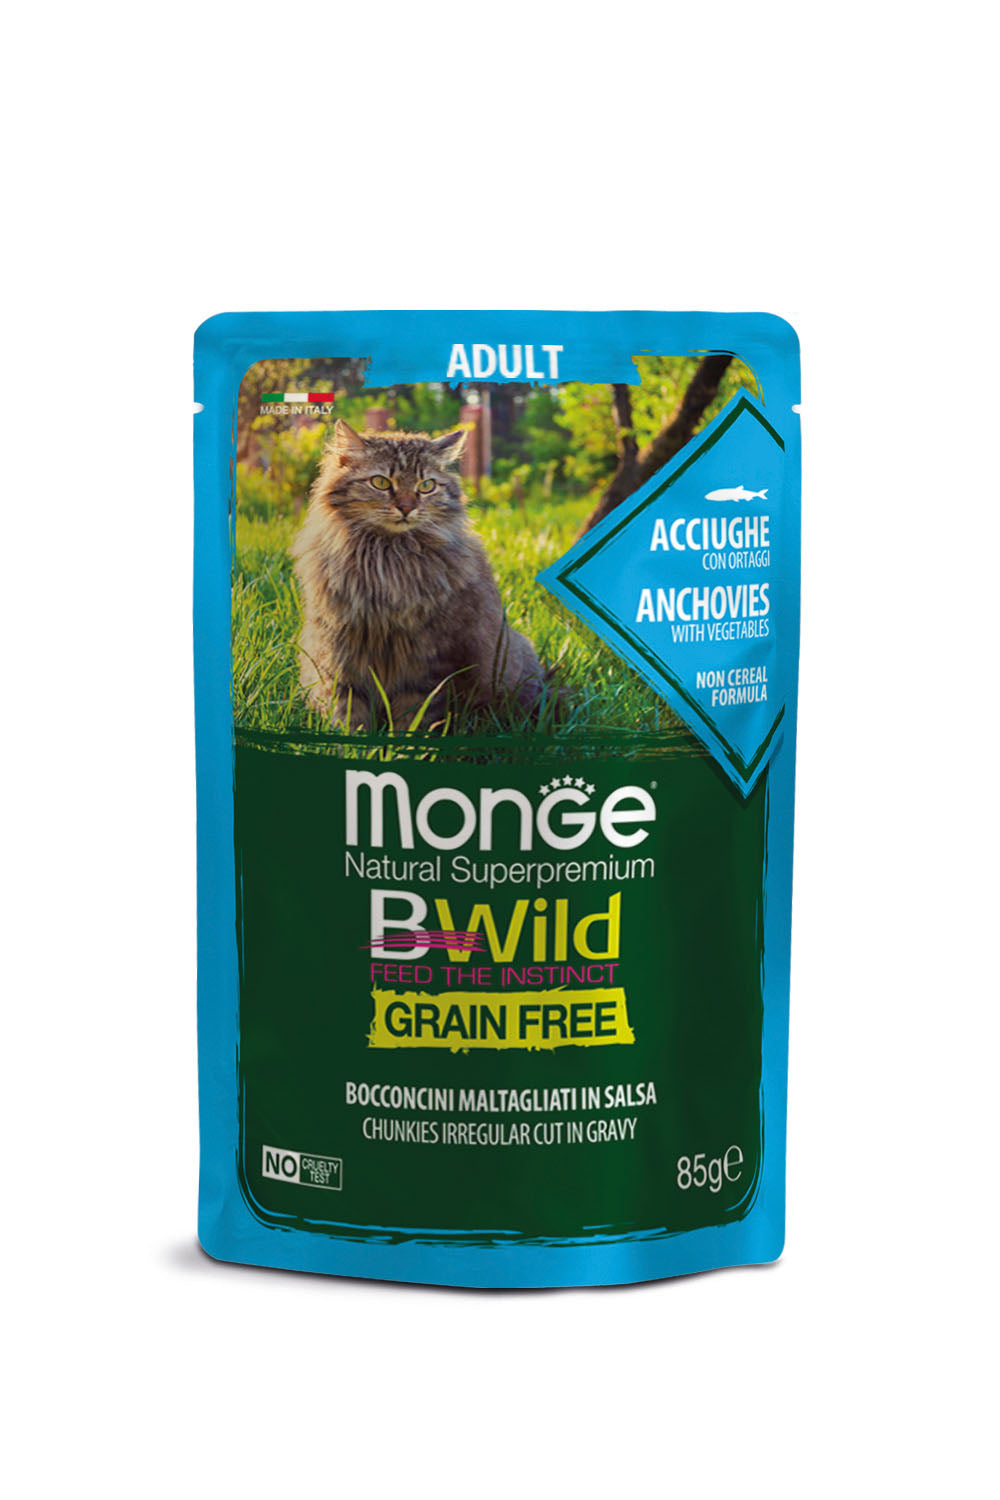 Monge Cat - Bwild - GRAIN FREE - Adult Anchovies